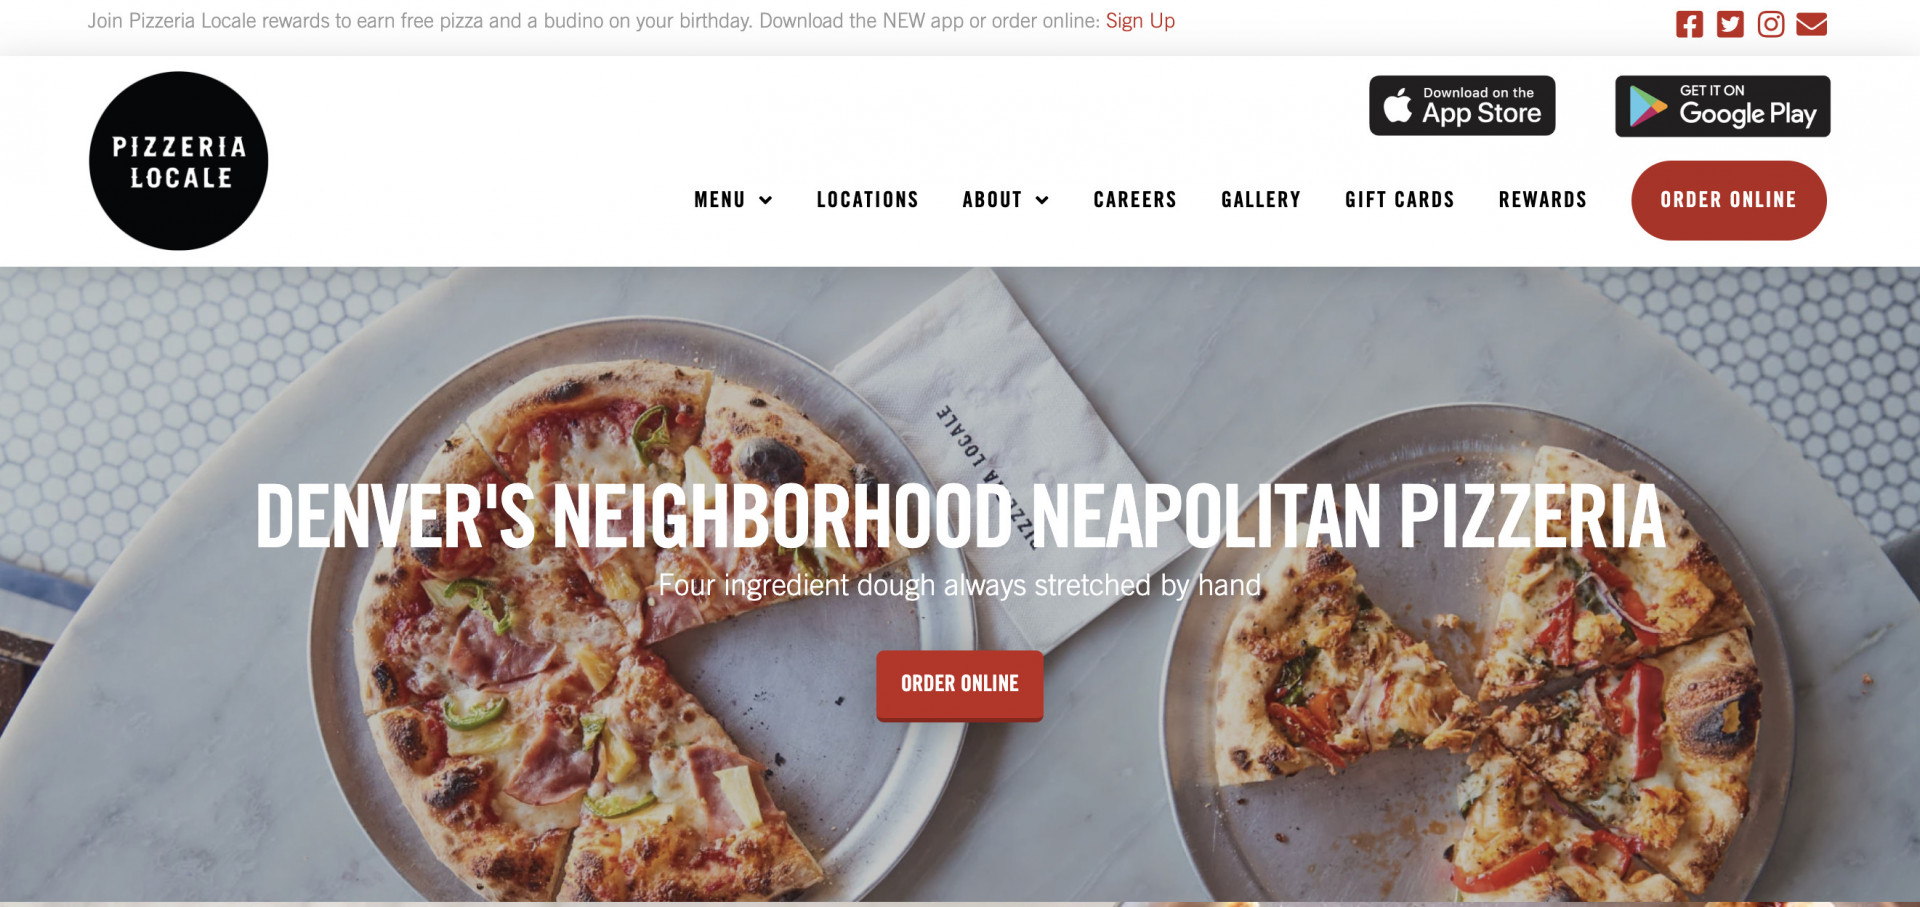 pizza website template example pizzeria locale